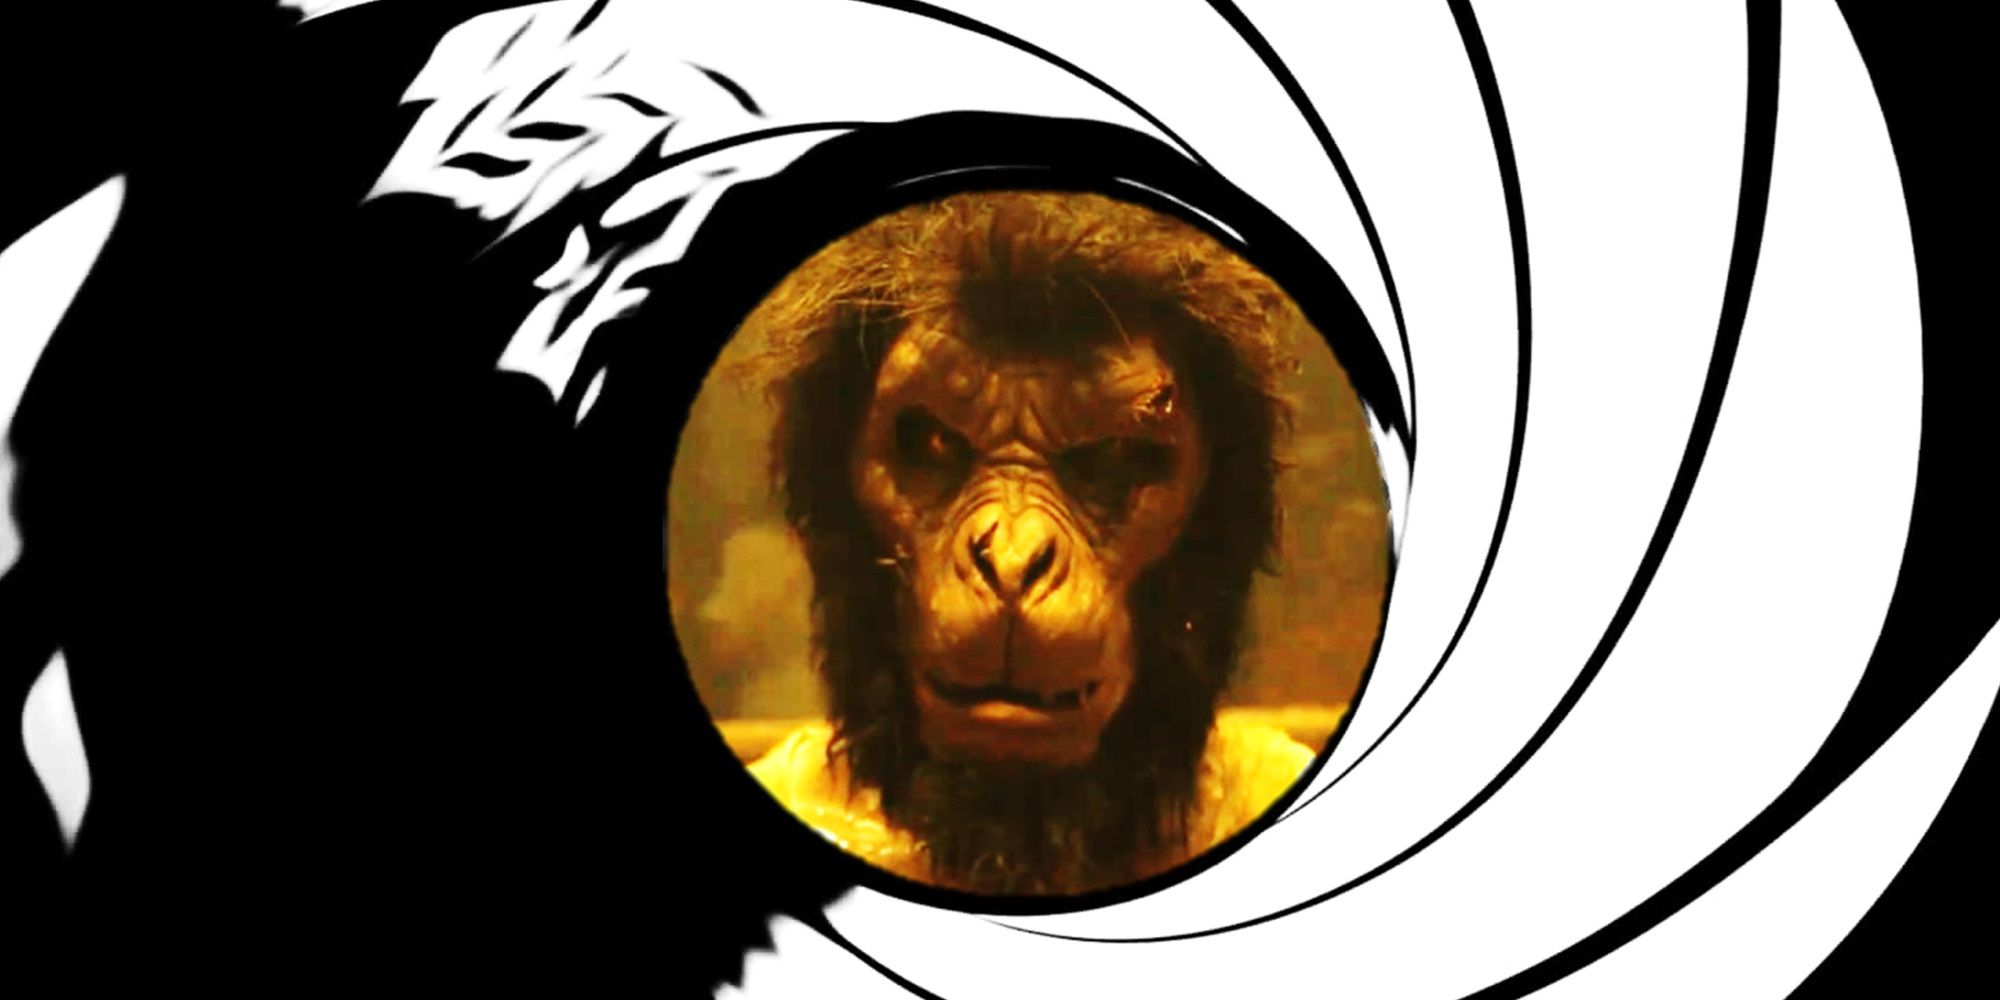 Monkey Man in the gun barrel from James Bond movies